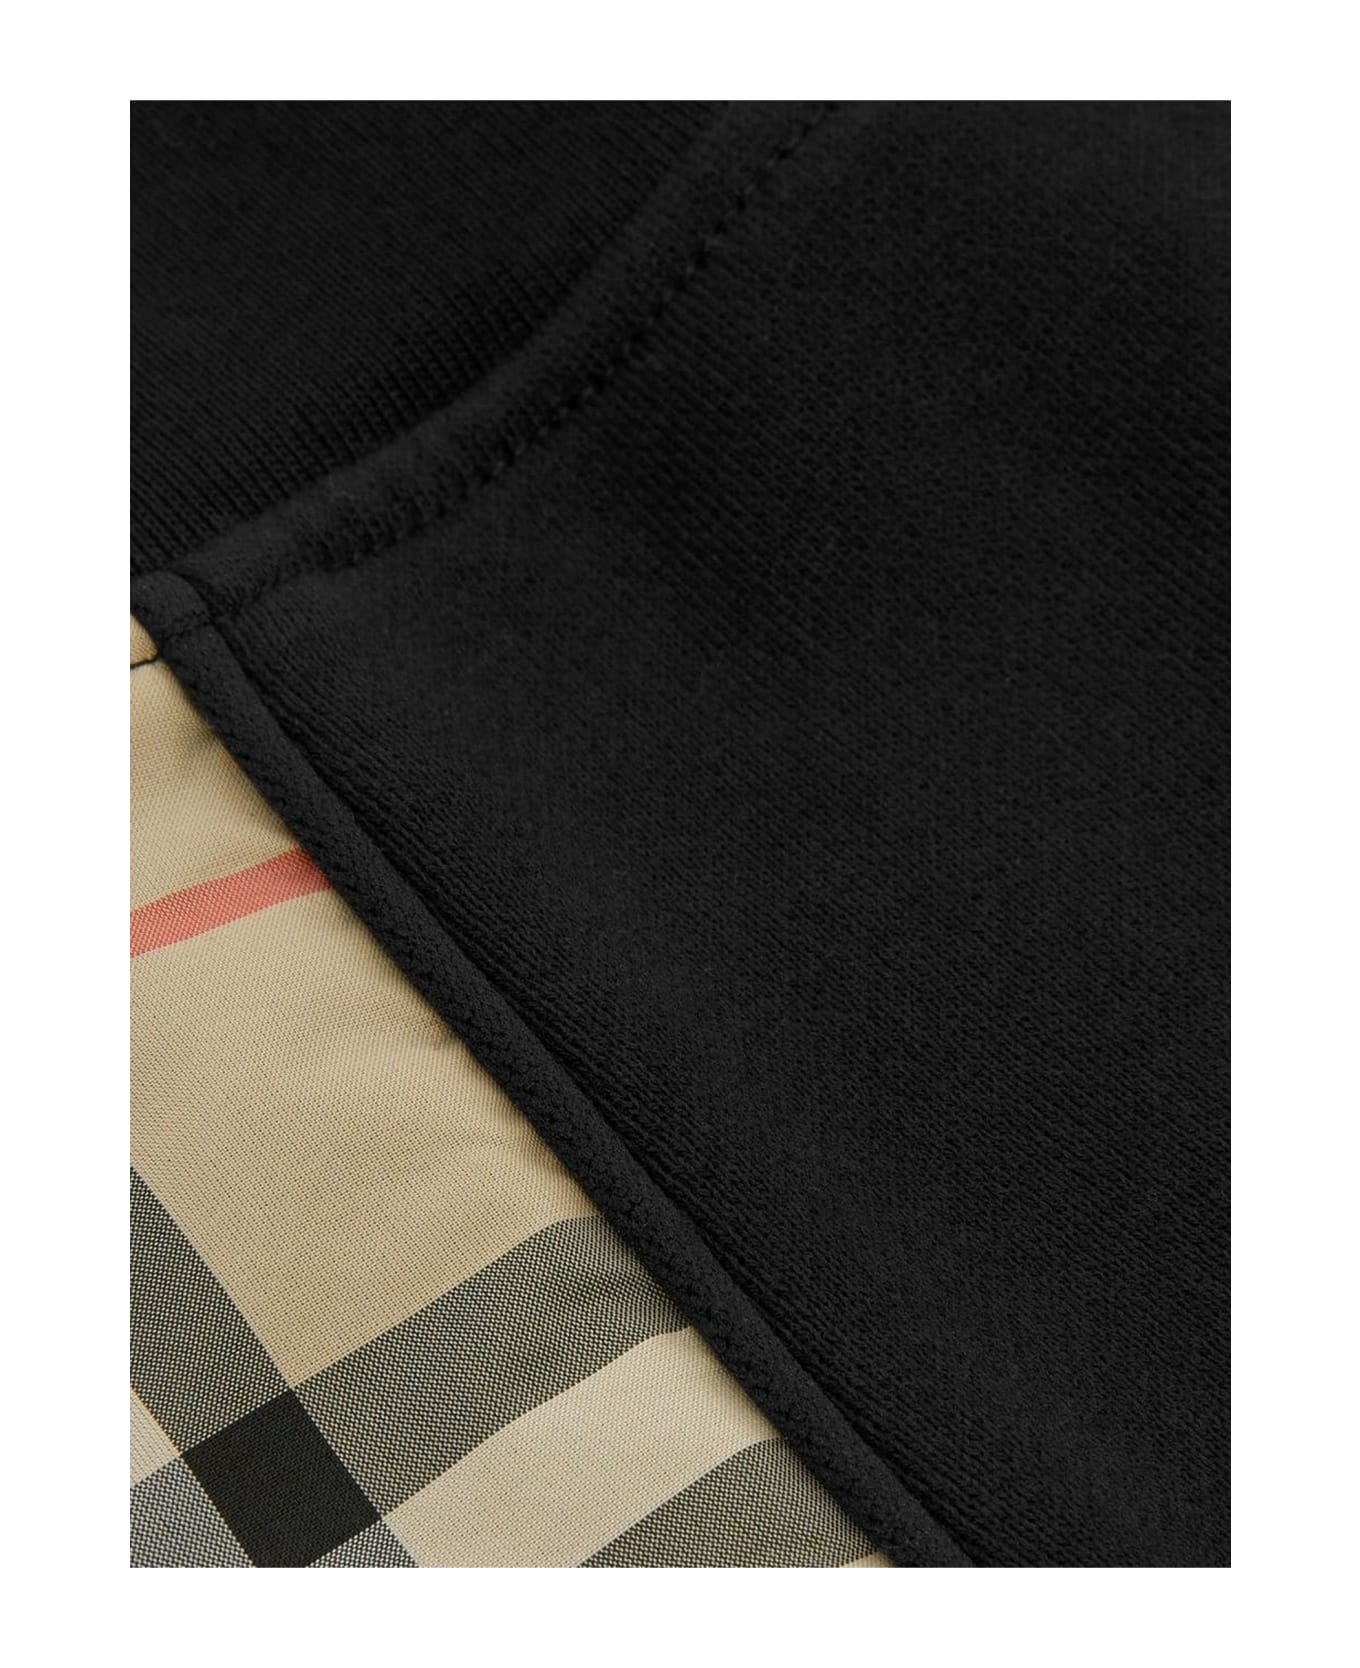 Burberry Black Cotton Shorts - Black ボトムス